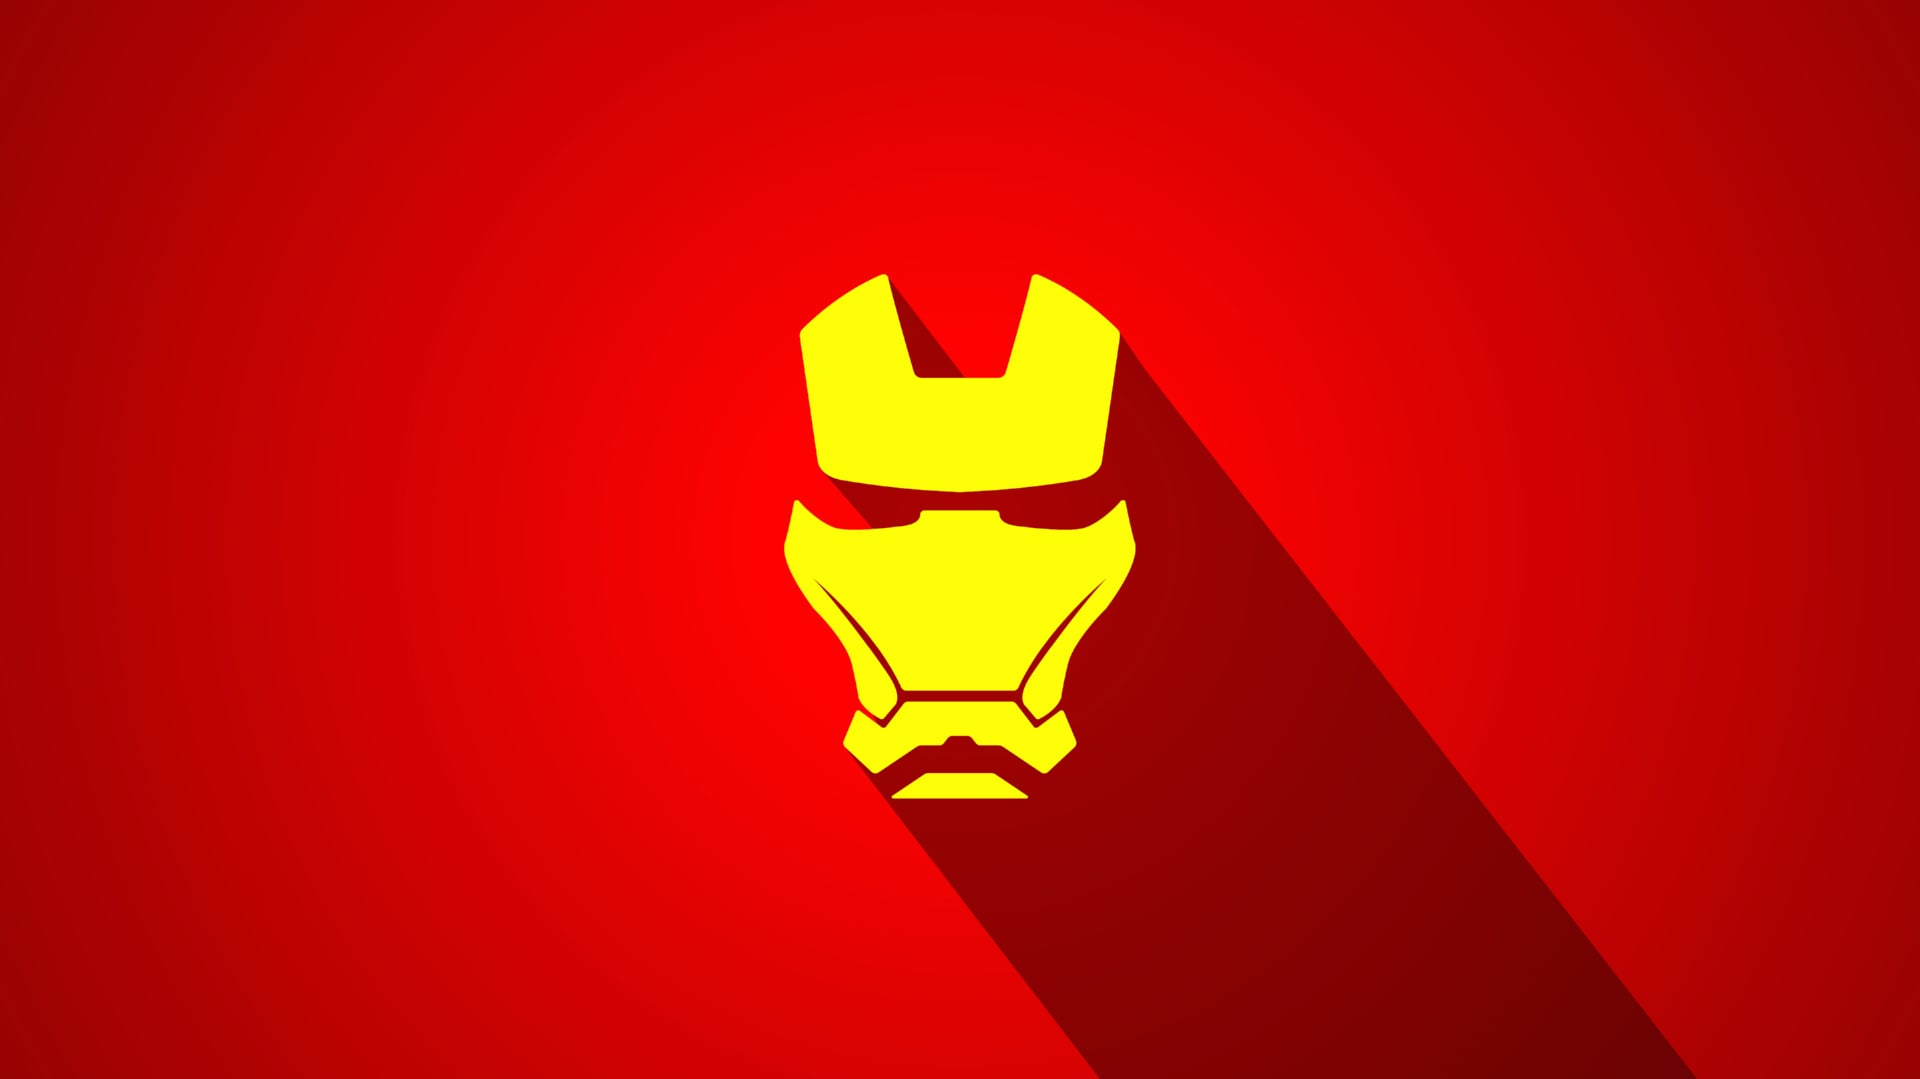 Digital Art Iron Man wallpapers HD quality